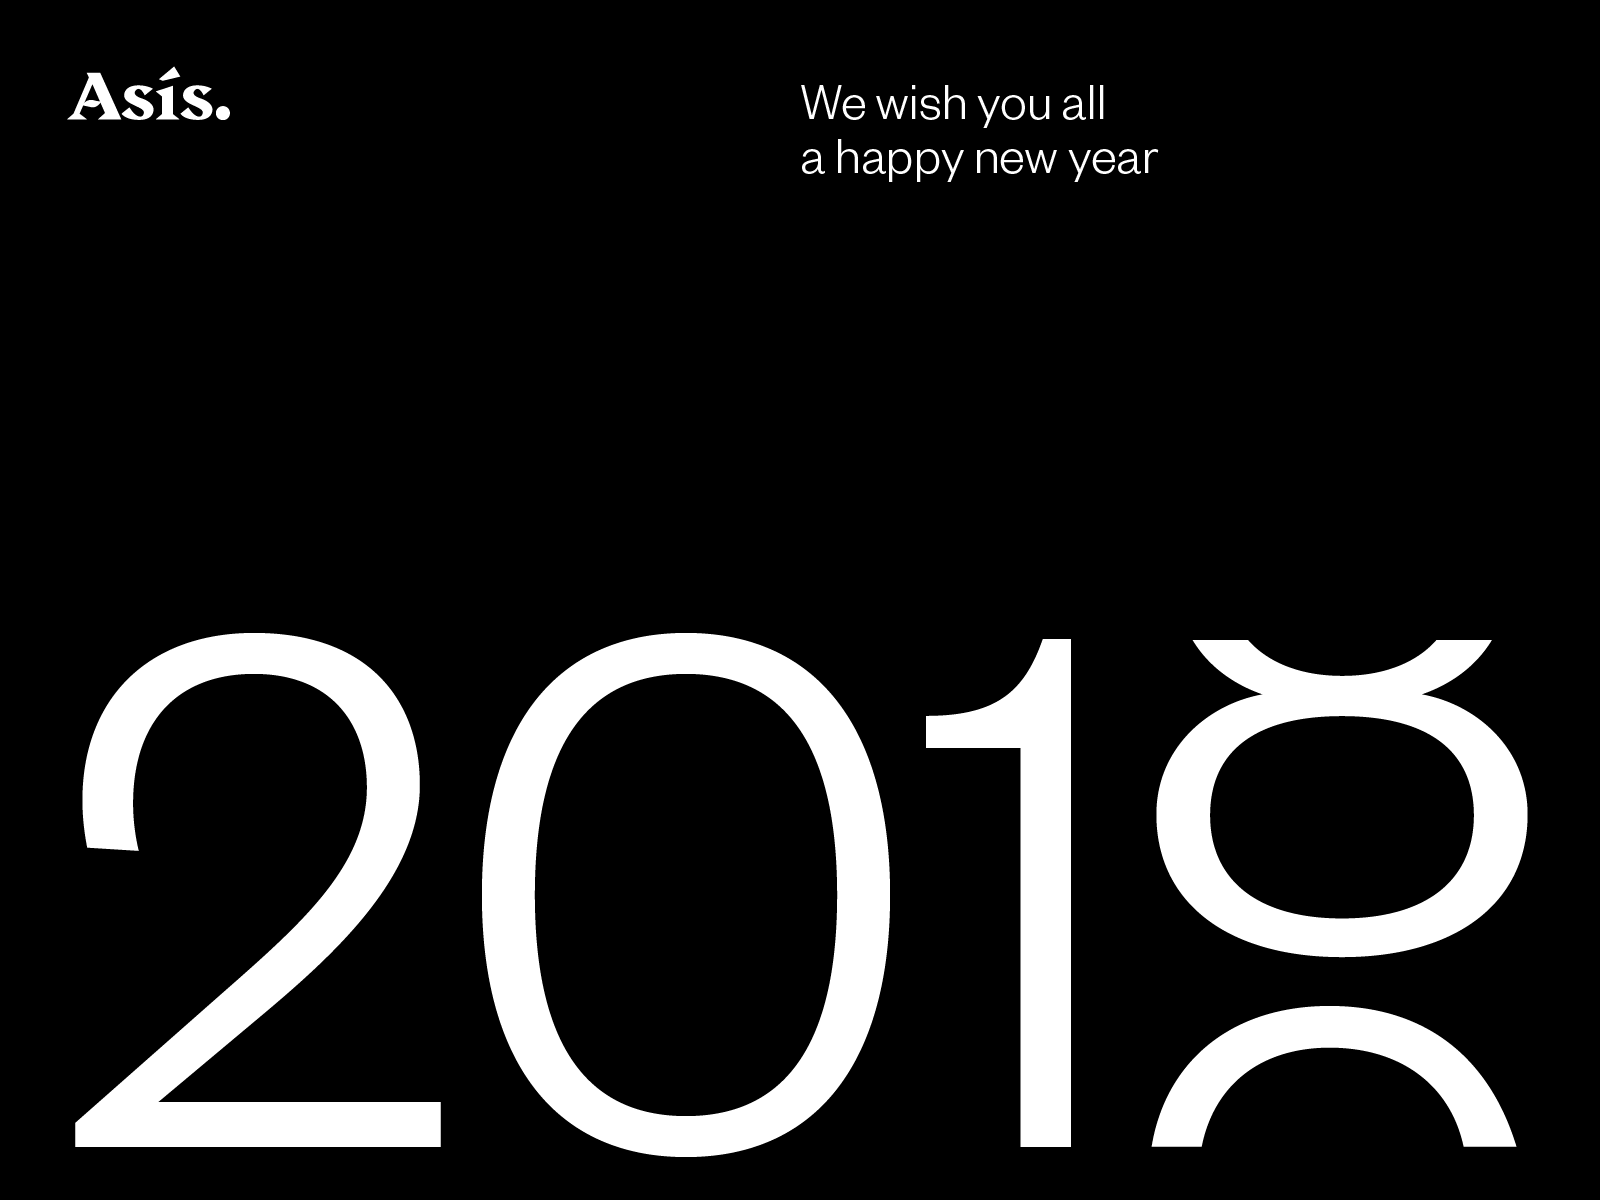 2018/9 2018 2019 argentina graphic design new year